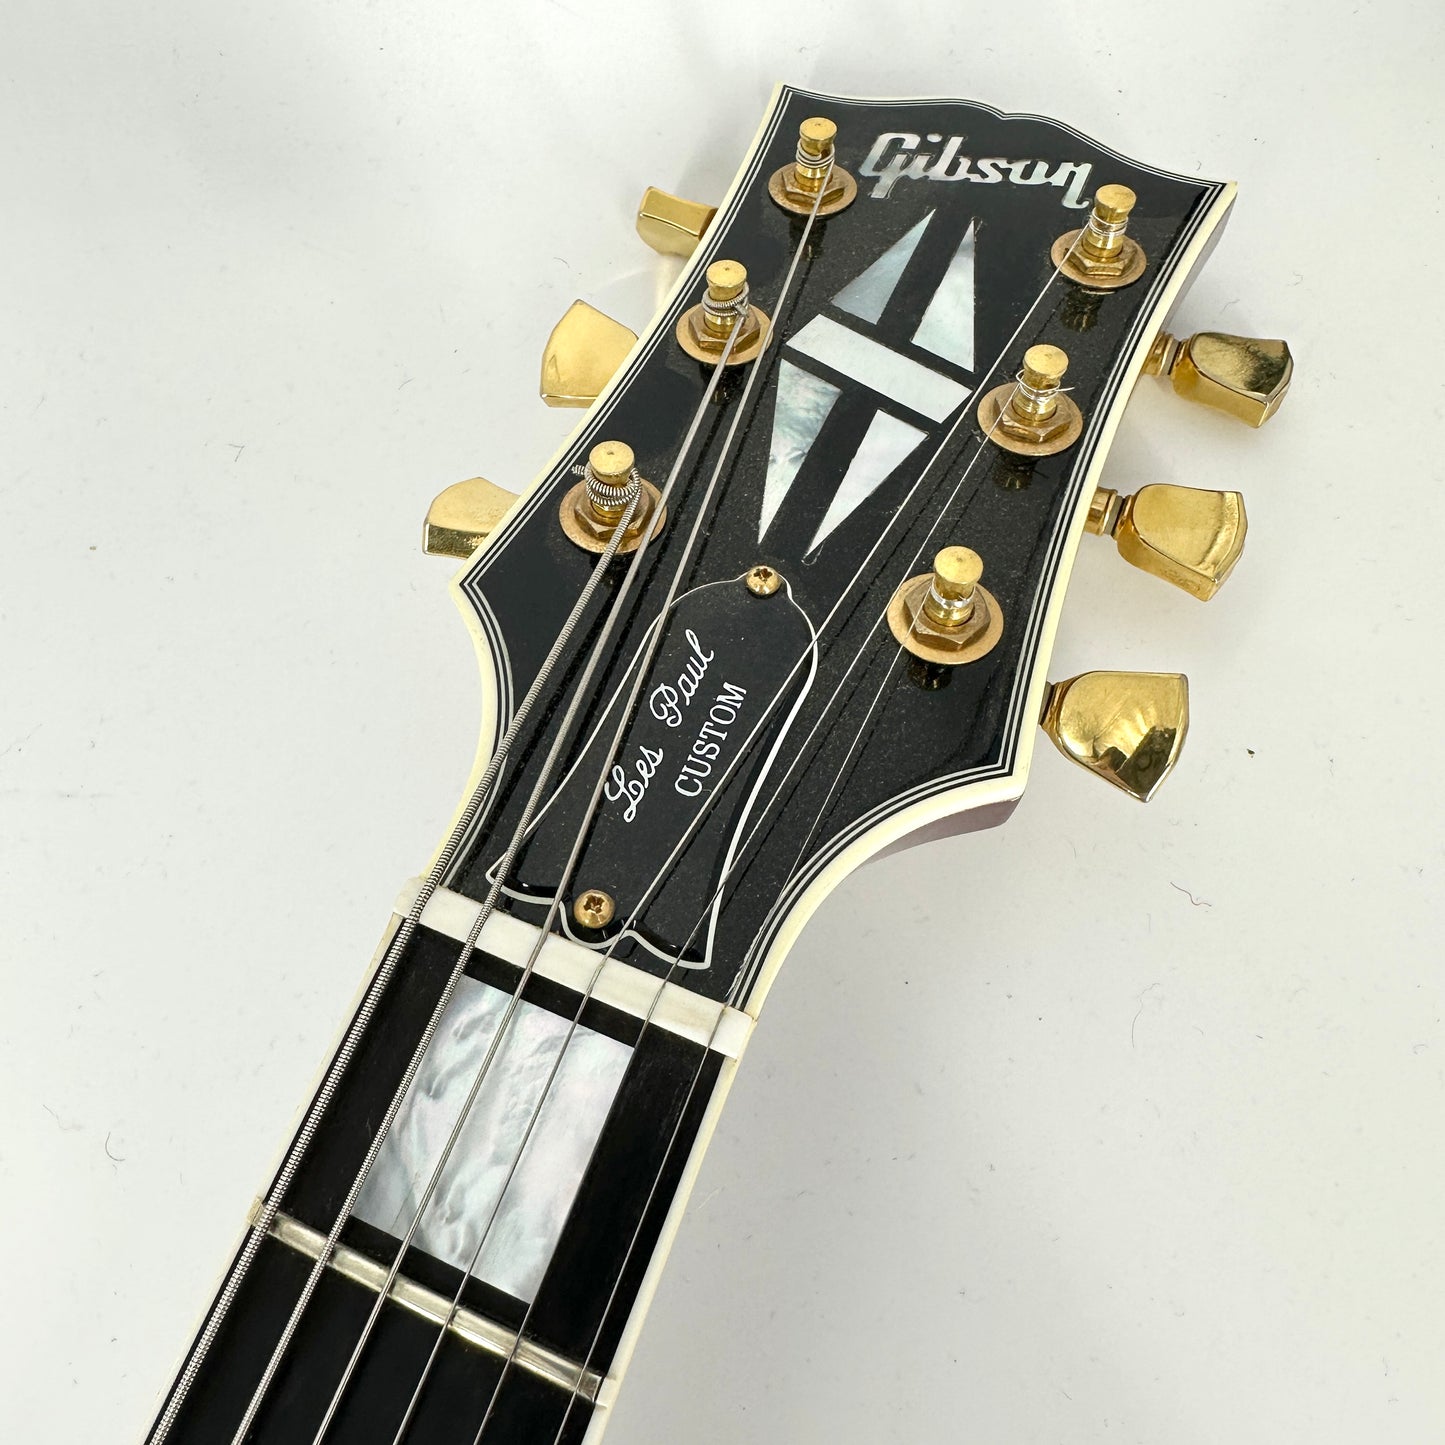 2008 Gibson Les Paul Custom – Heritage Cherry Sunburst